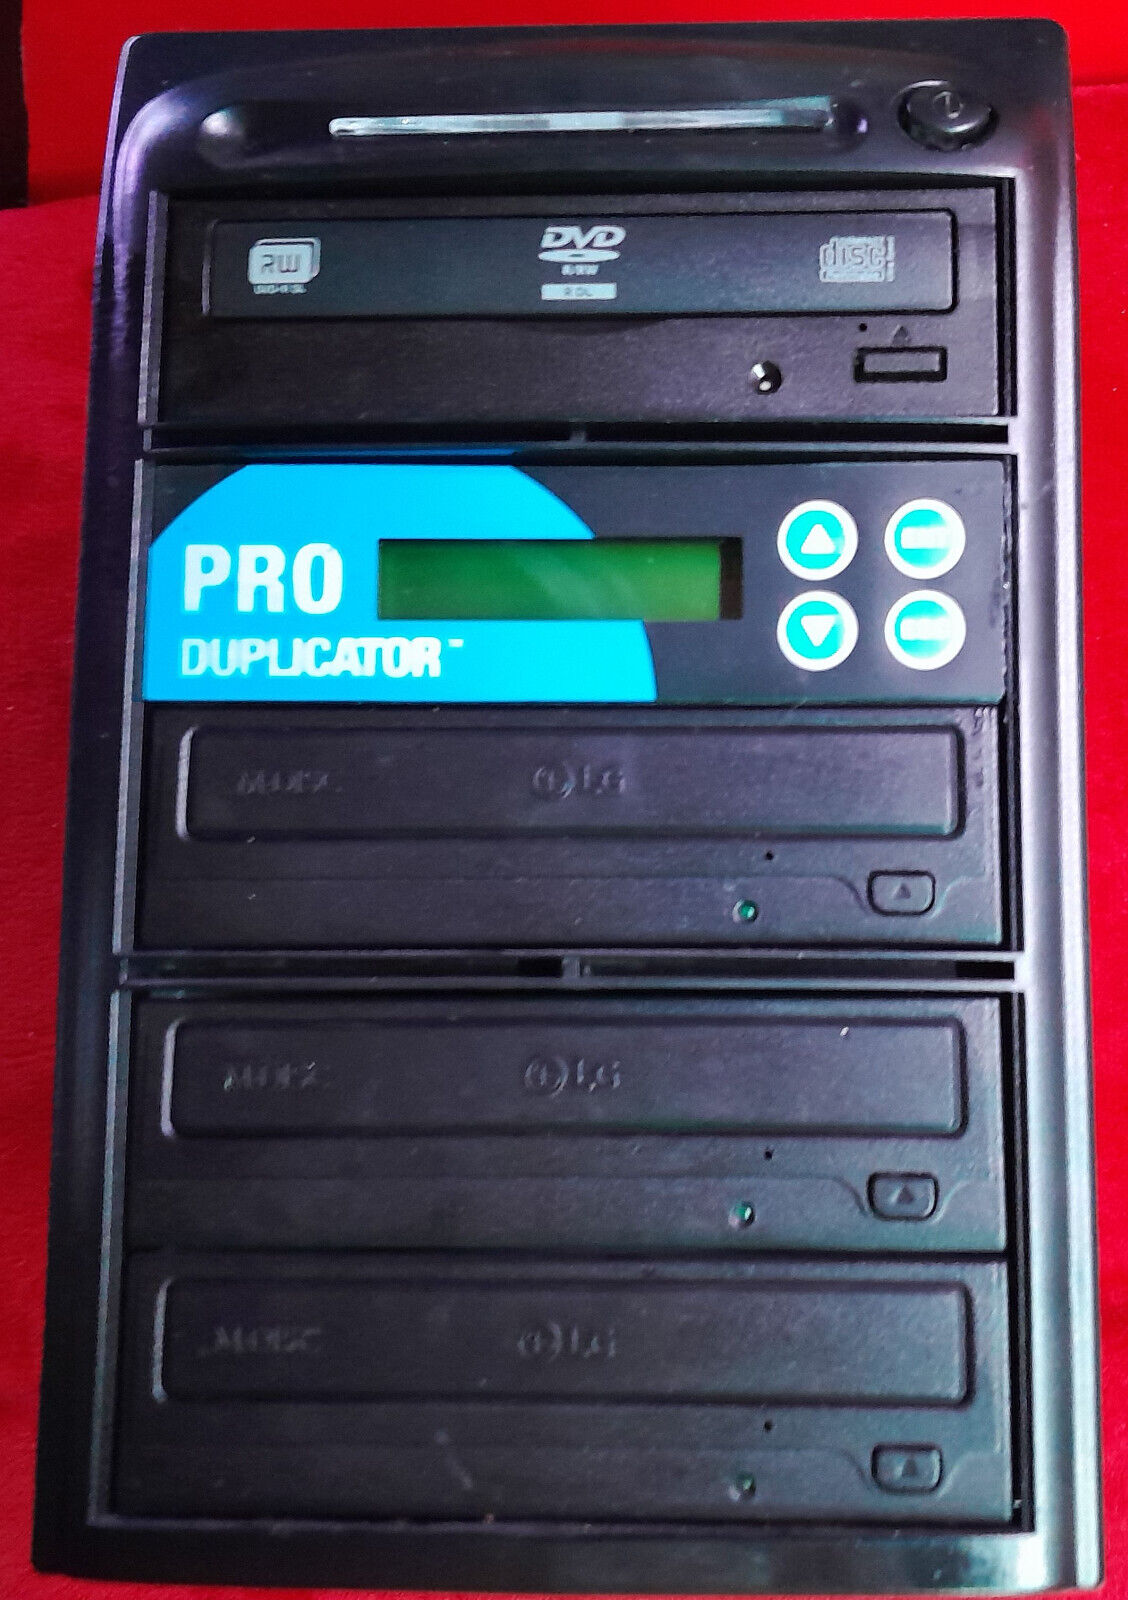 LG Pro Duplicator 1 TO 3 CD DVD Burner Duplication Tower. Tested.